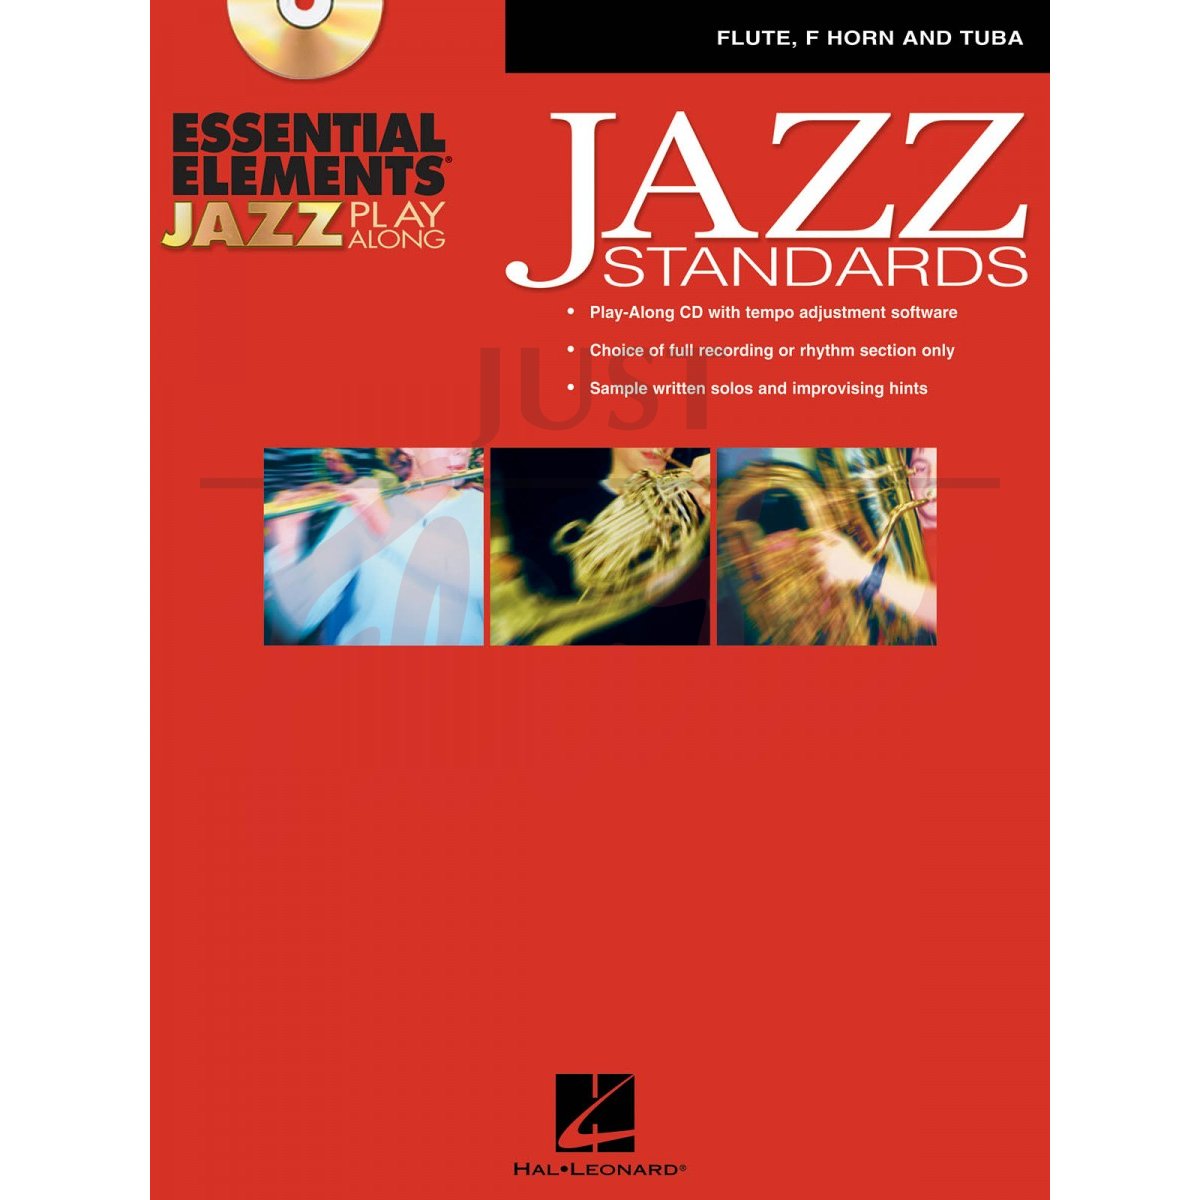 Essential Elements Jazz Play-Along: Jazz Standards